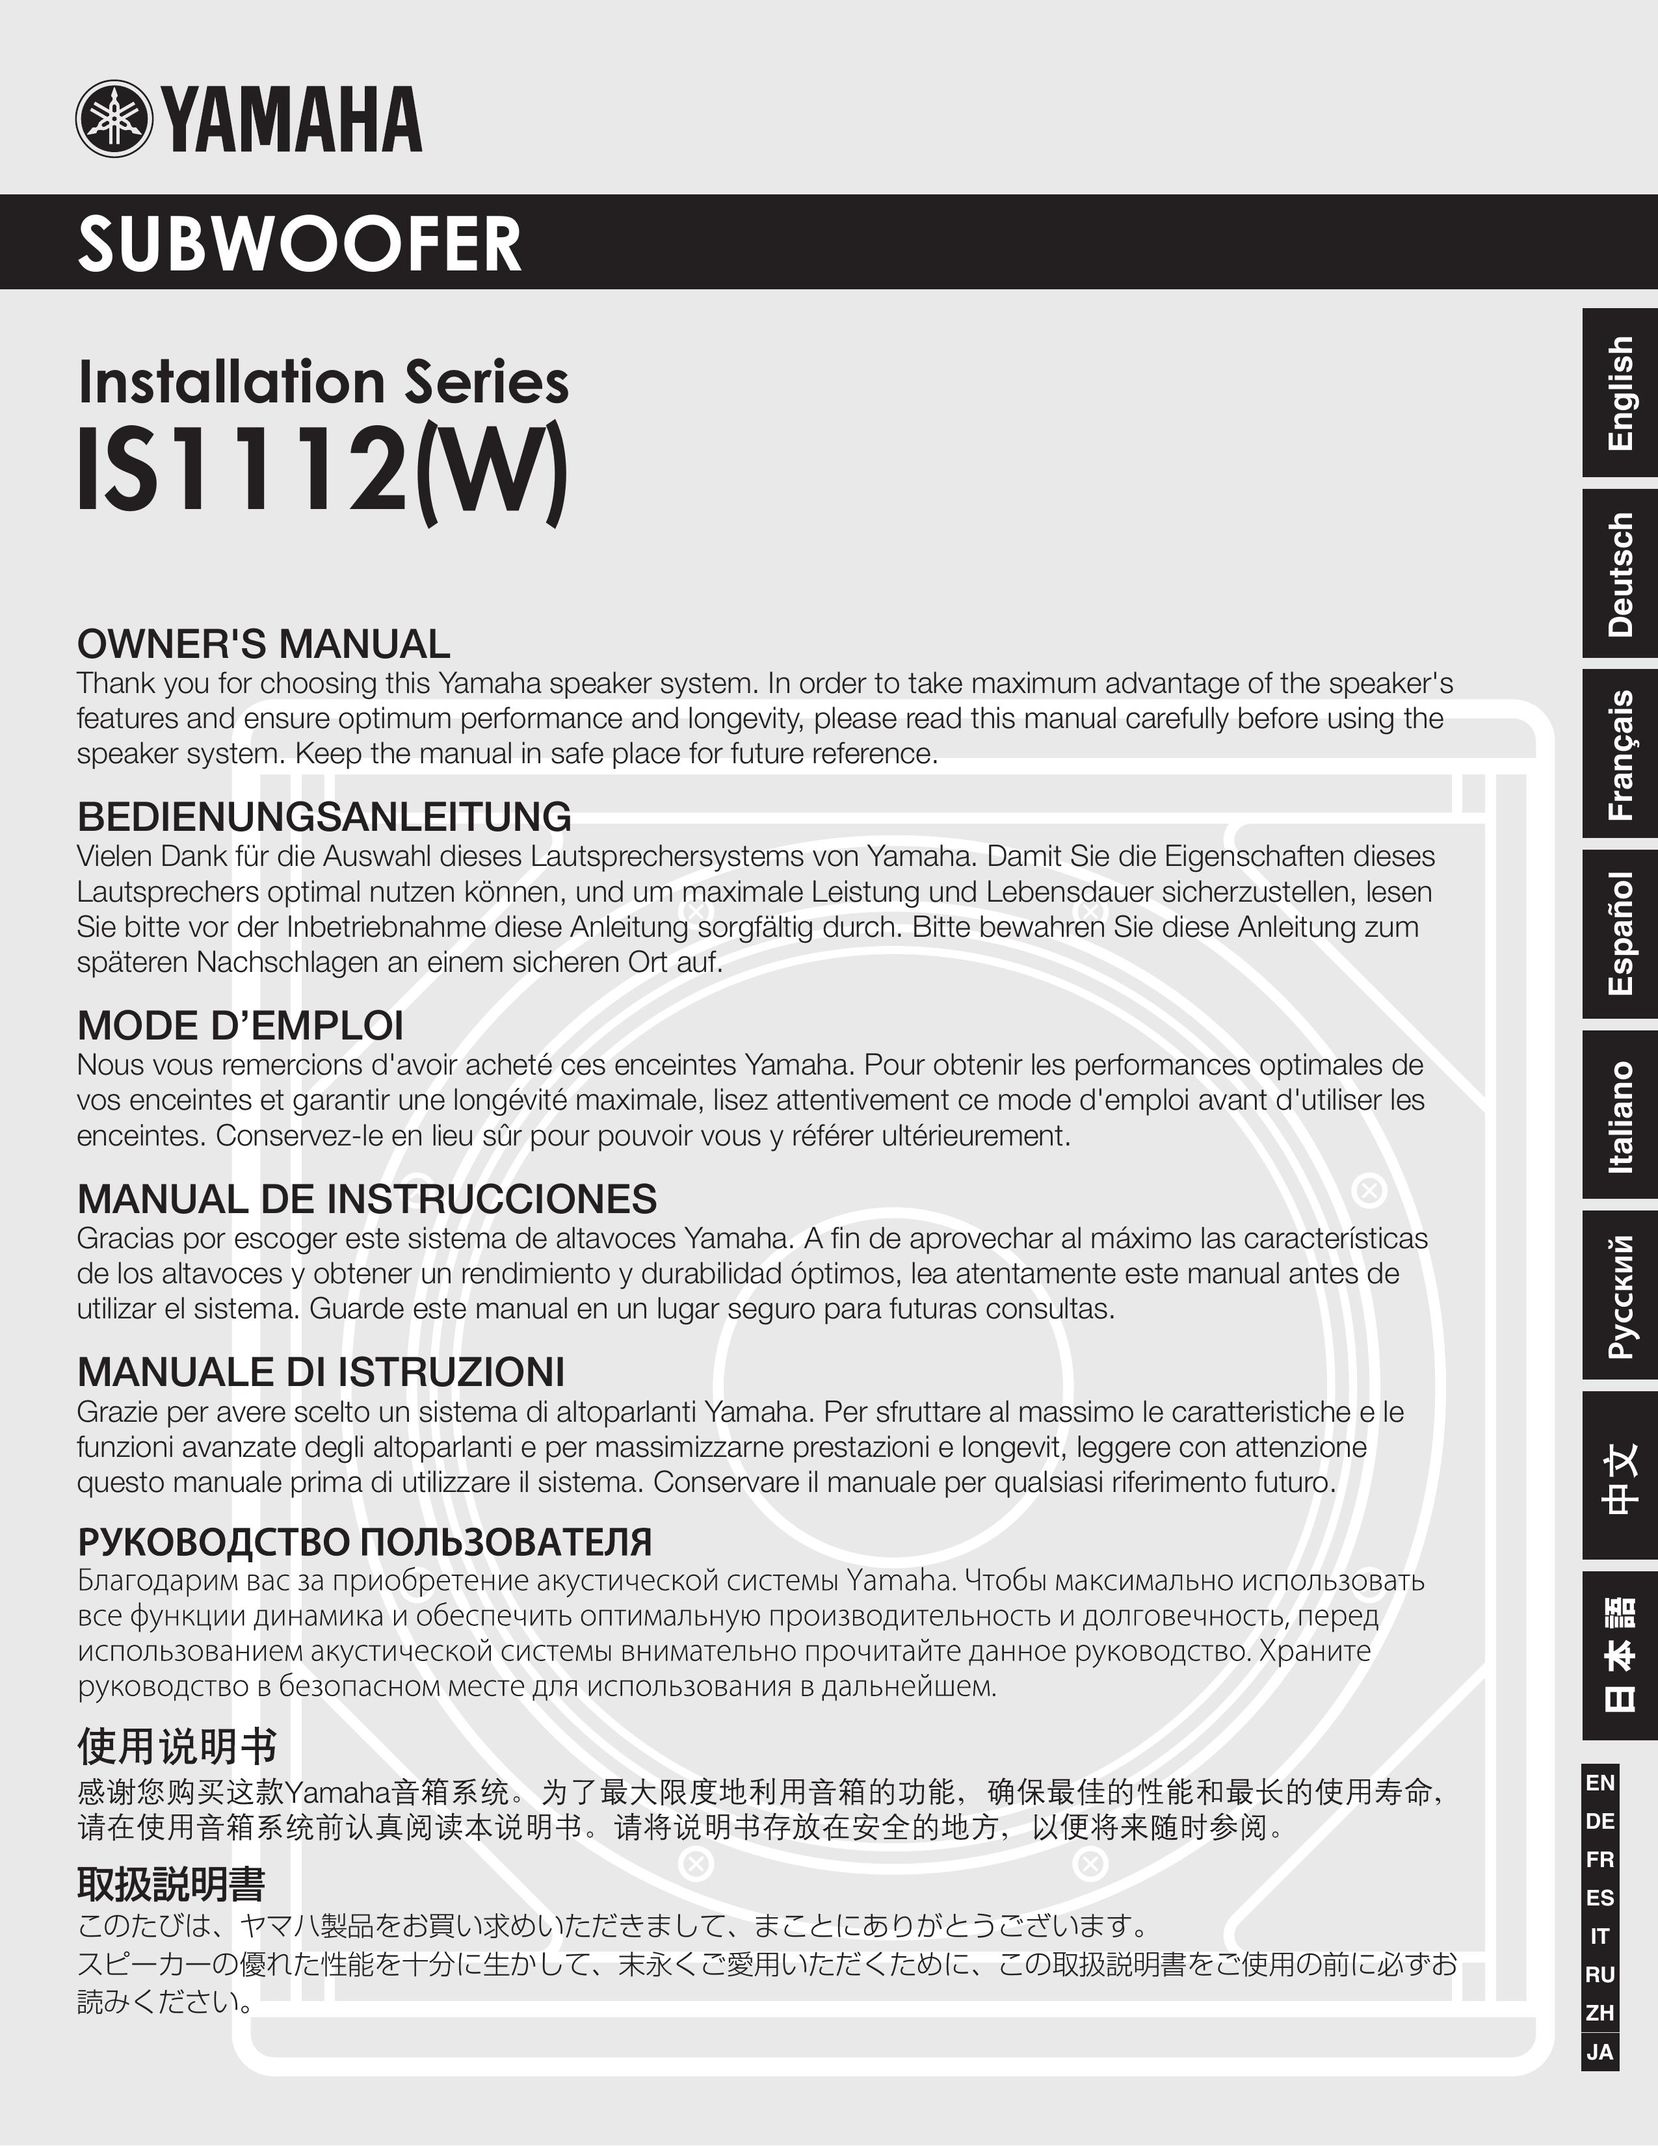 Yamaha IS1112(W) Speaker User Manual